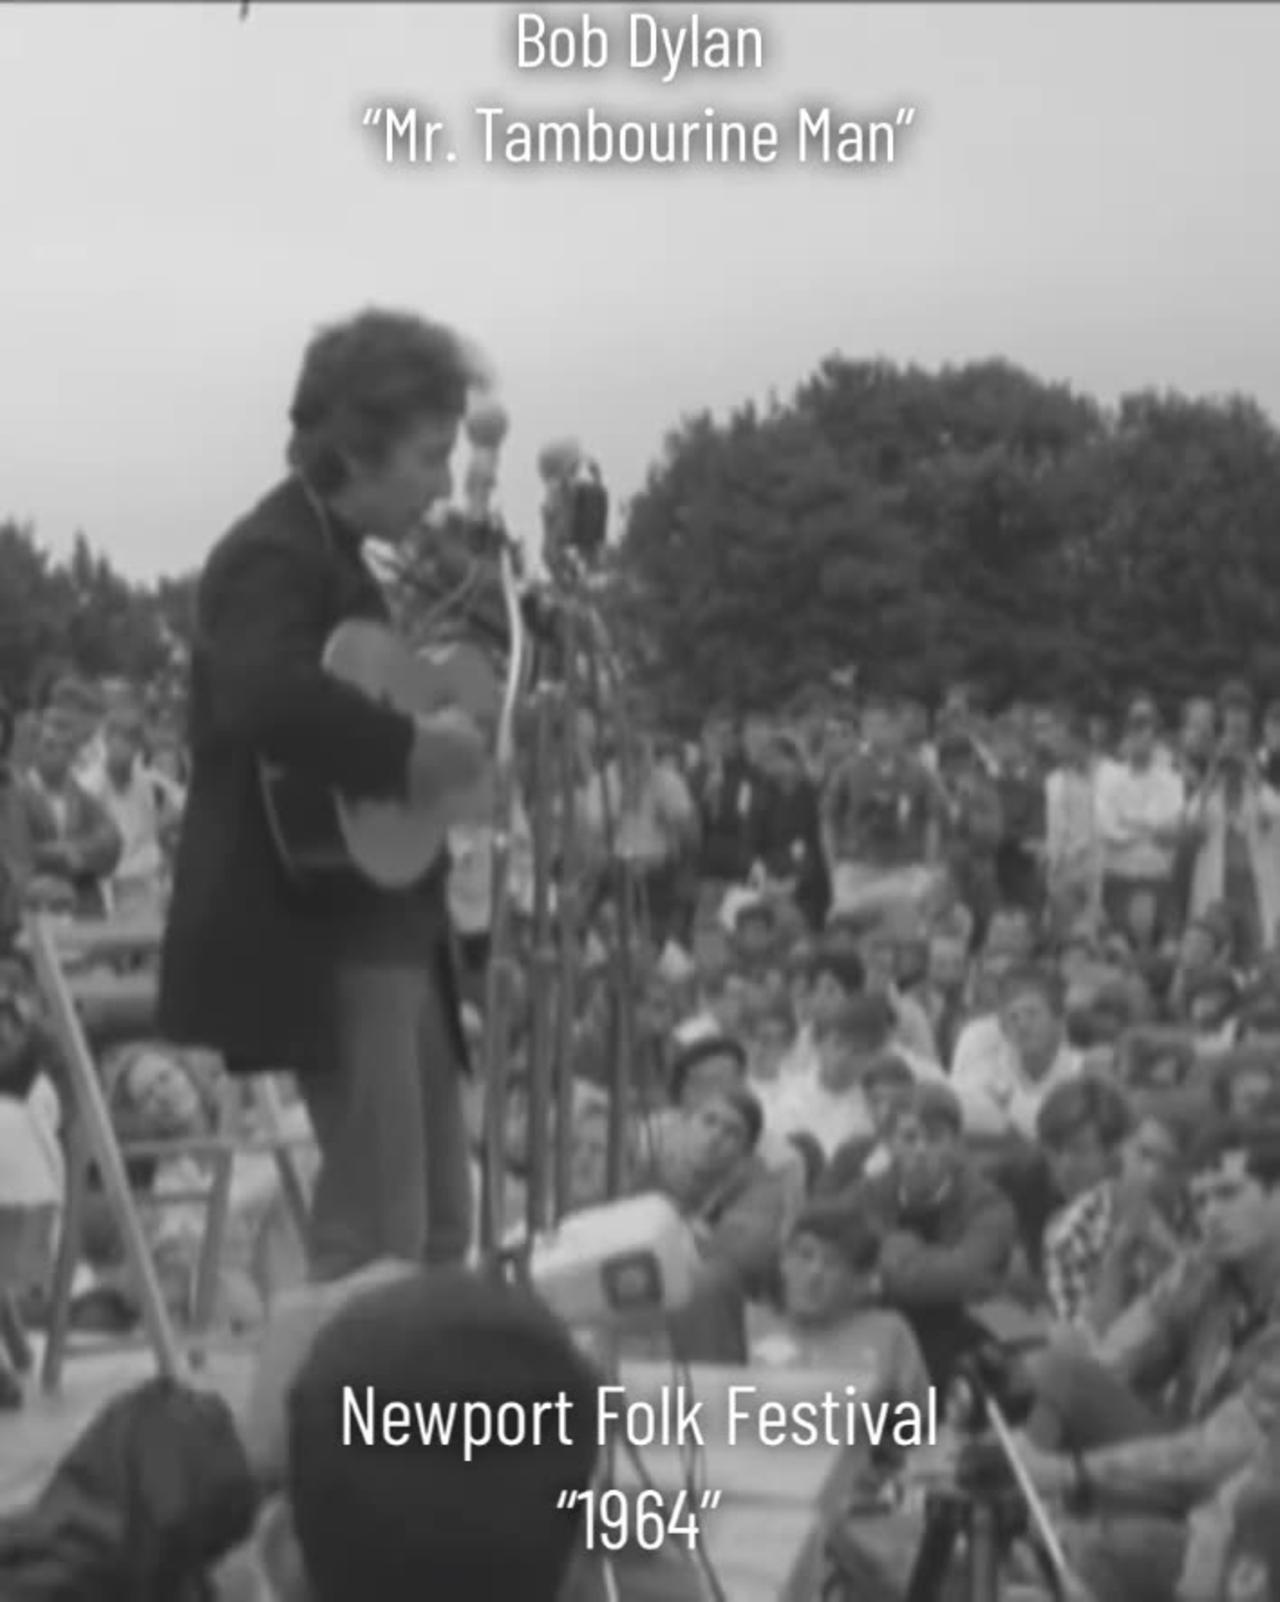 Bob Dylan Performing "Mr. Tambourine Man" Live 1964